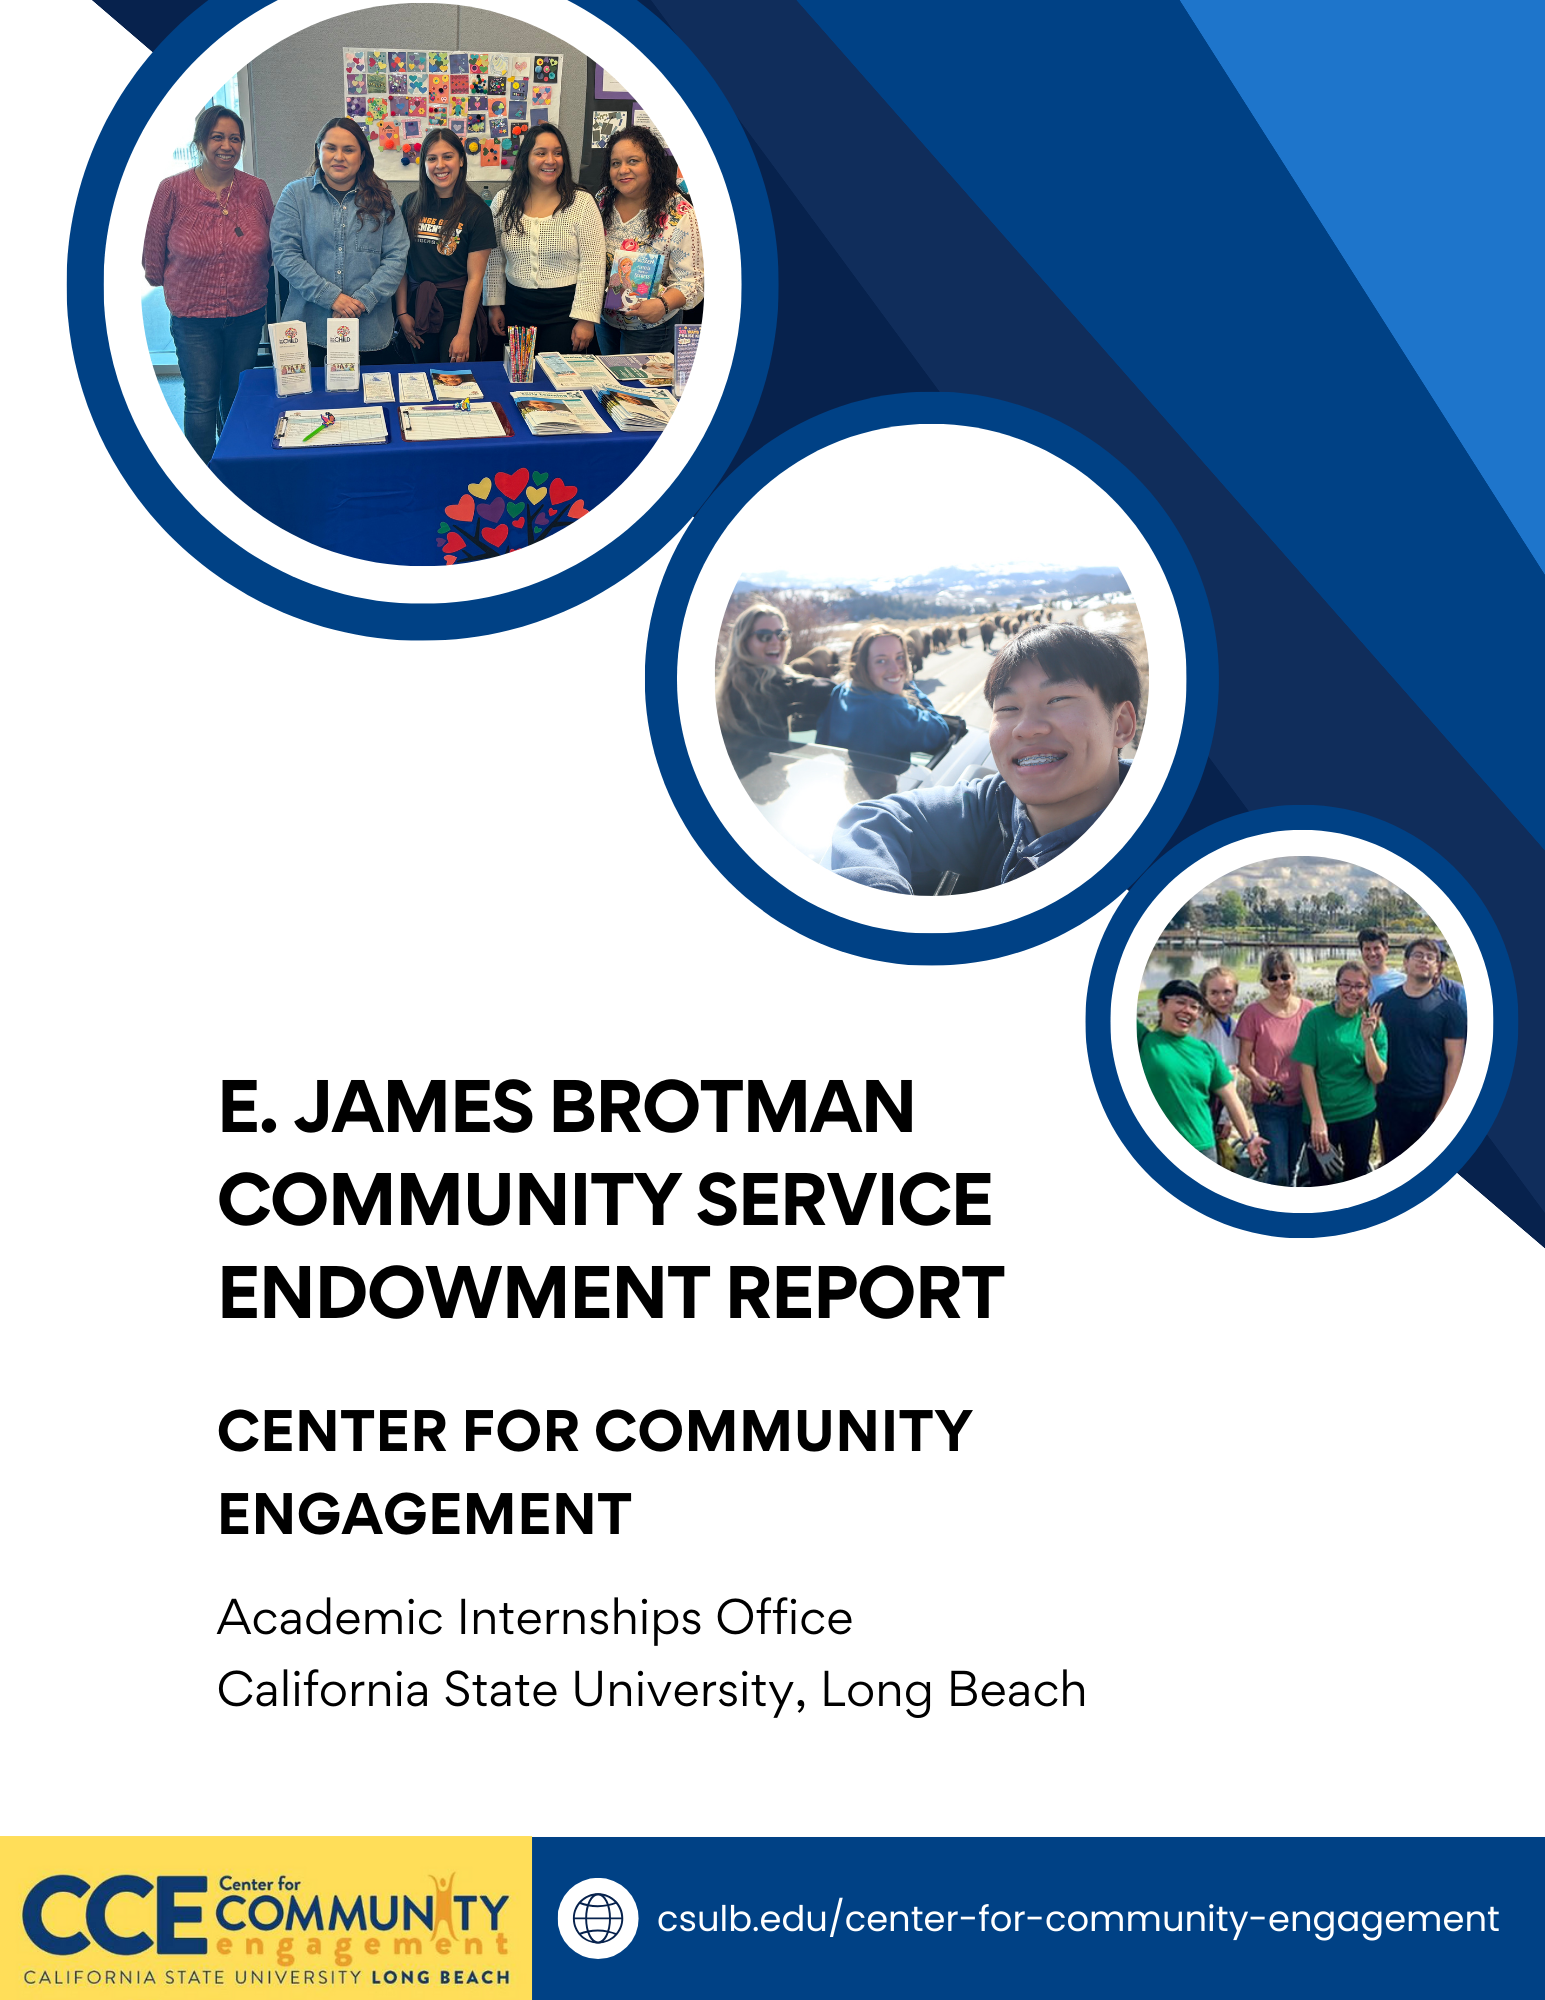 E. James Brotman Community service endowment report cover